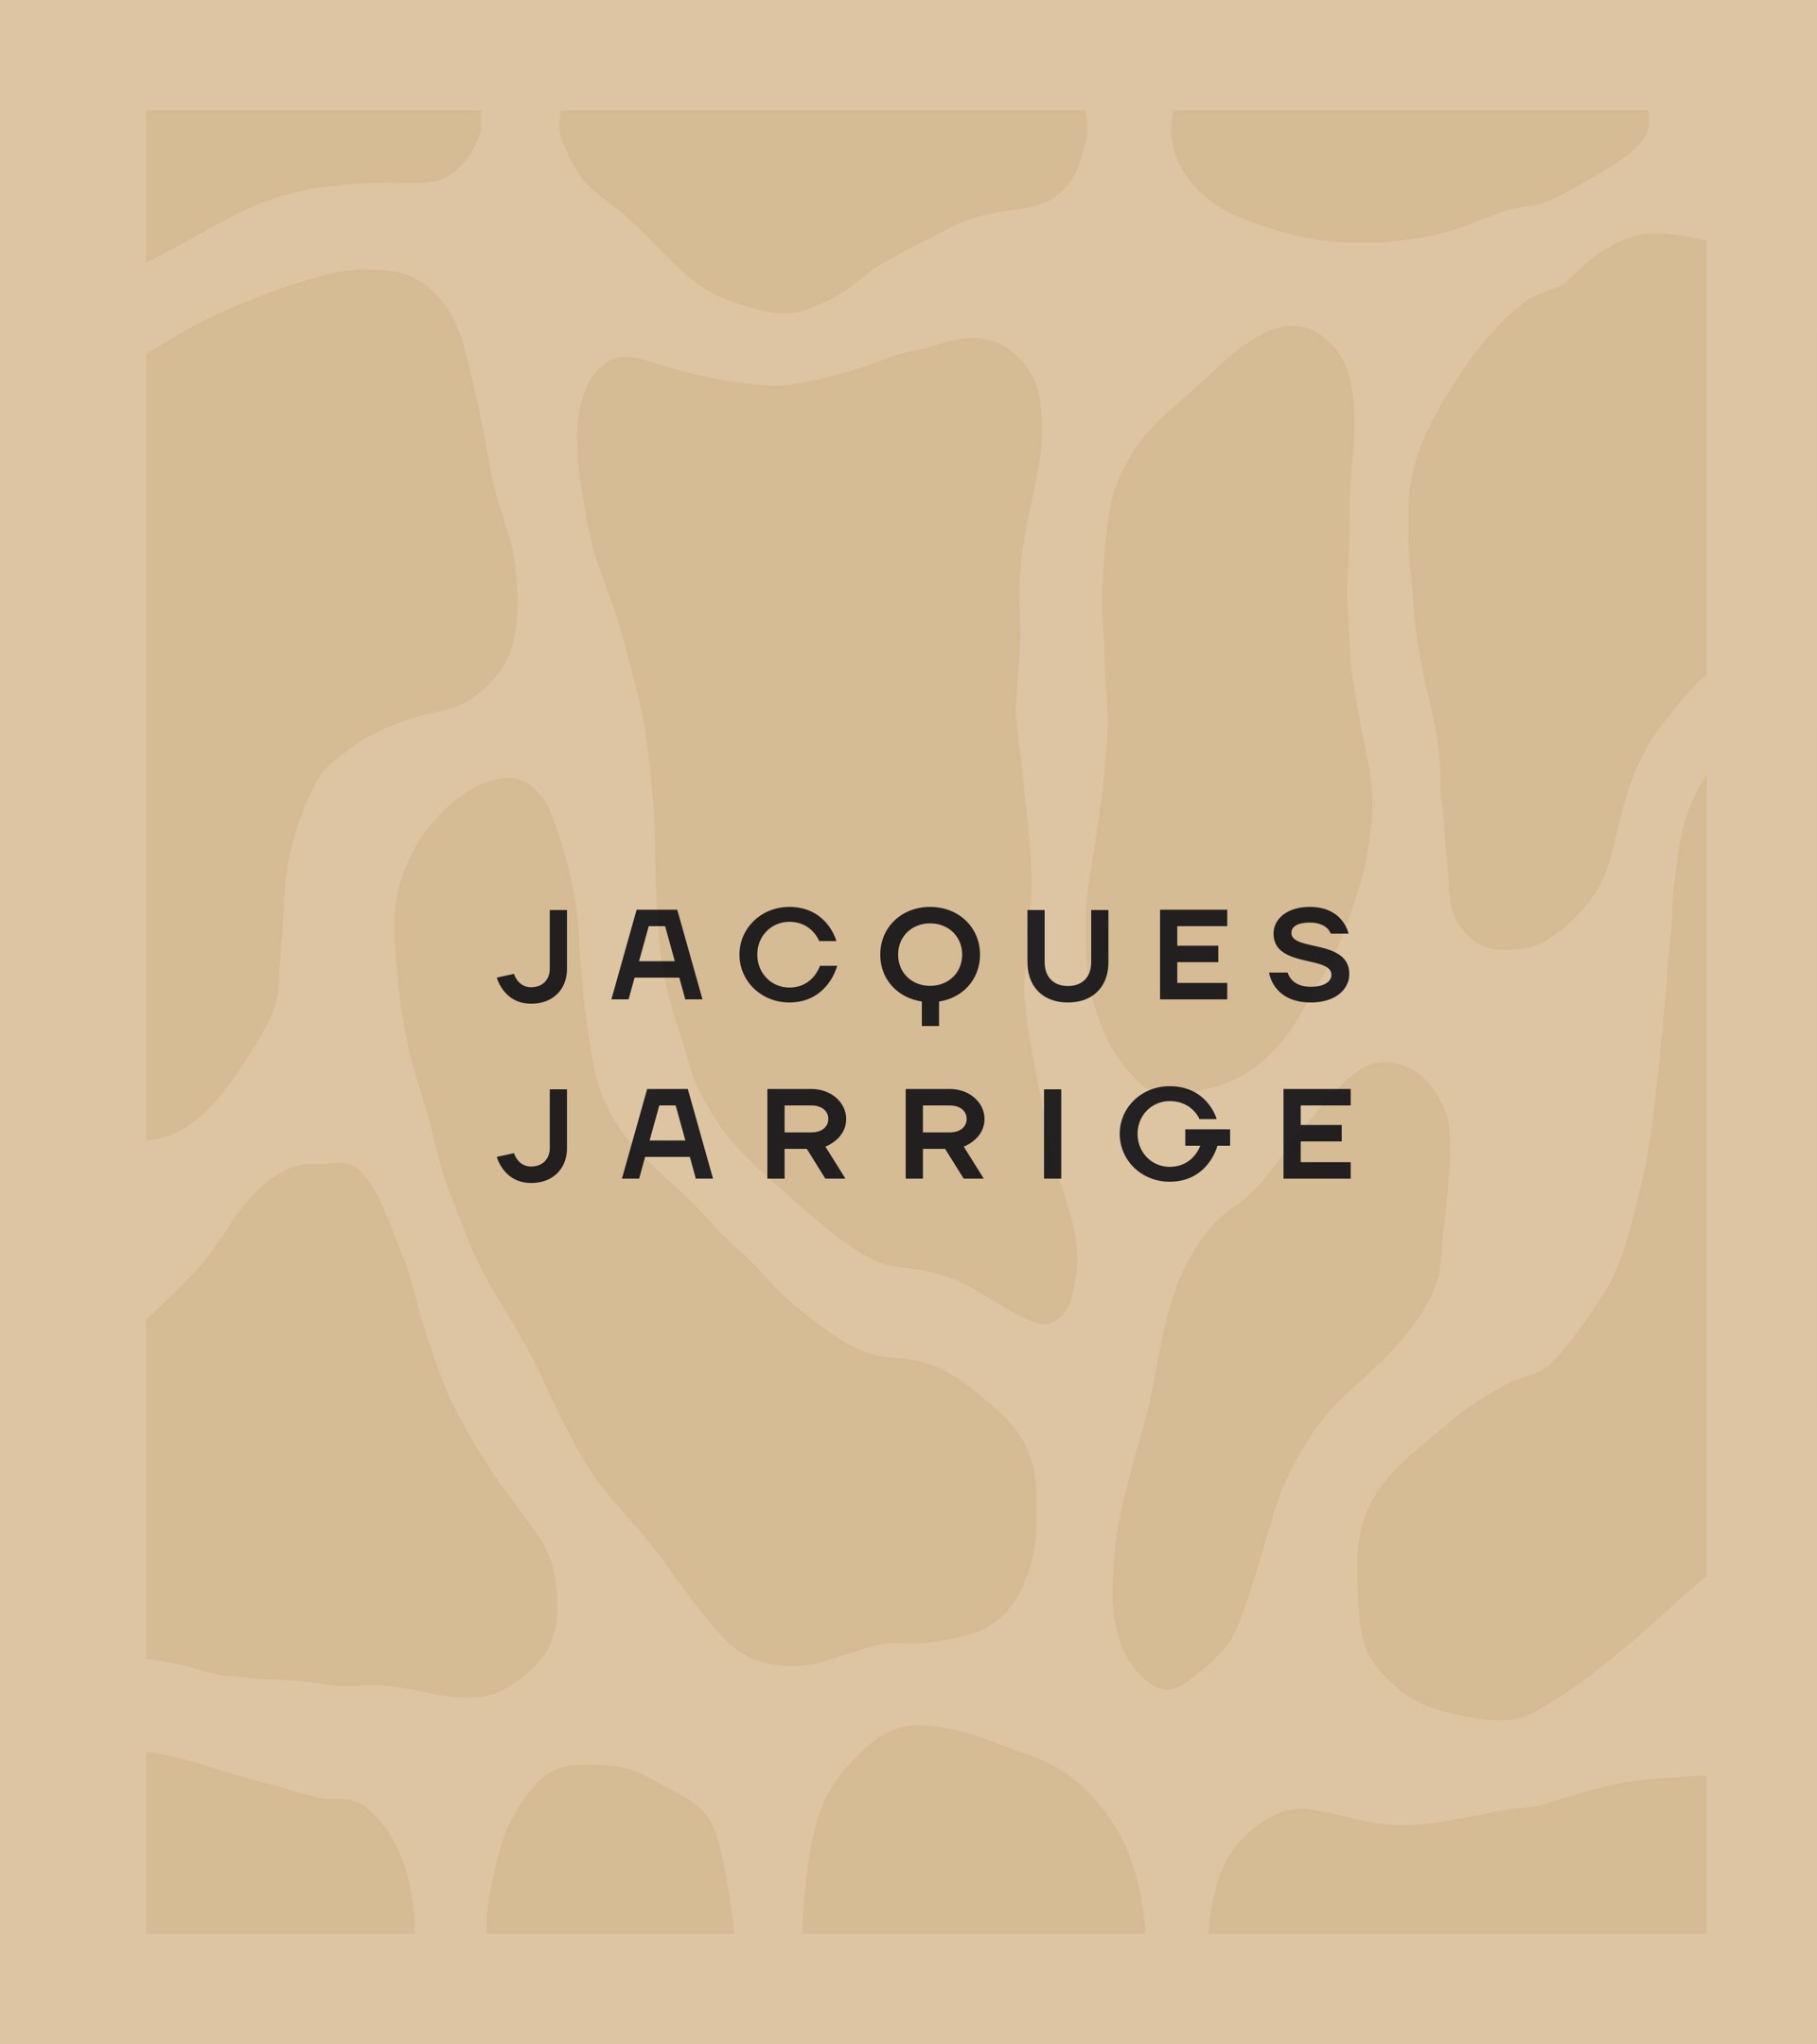 Art book  "Jacques Jarrige " by Jacques Jarrige